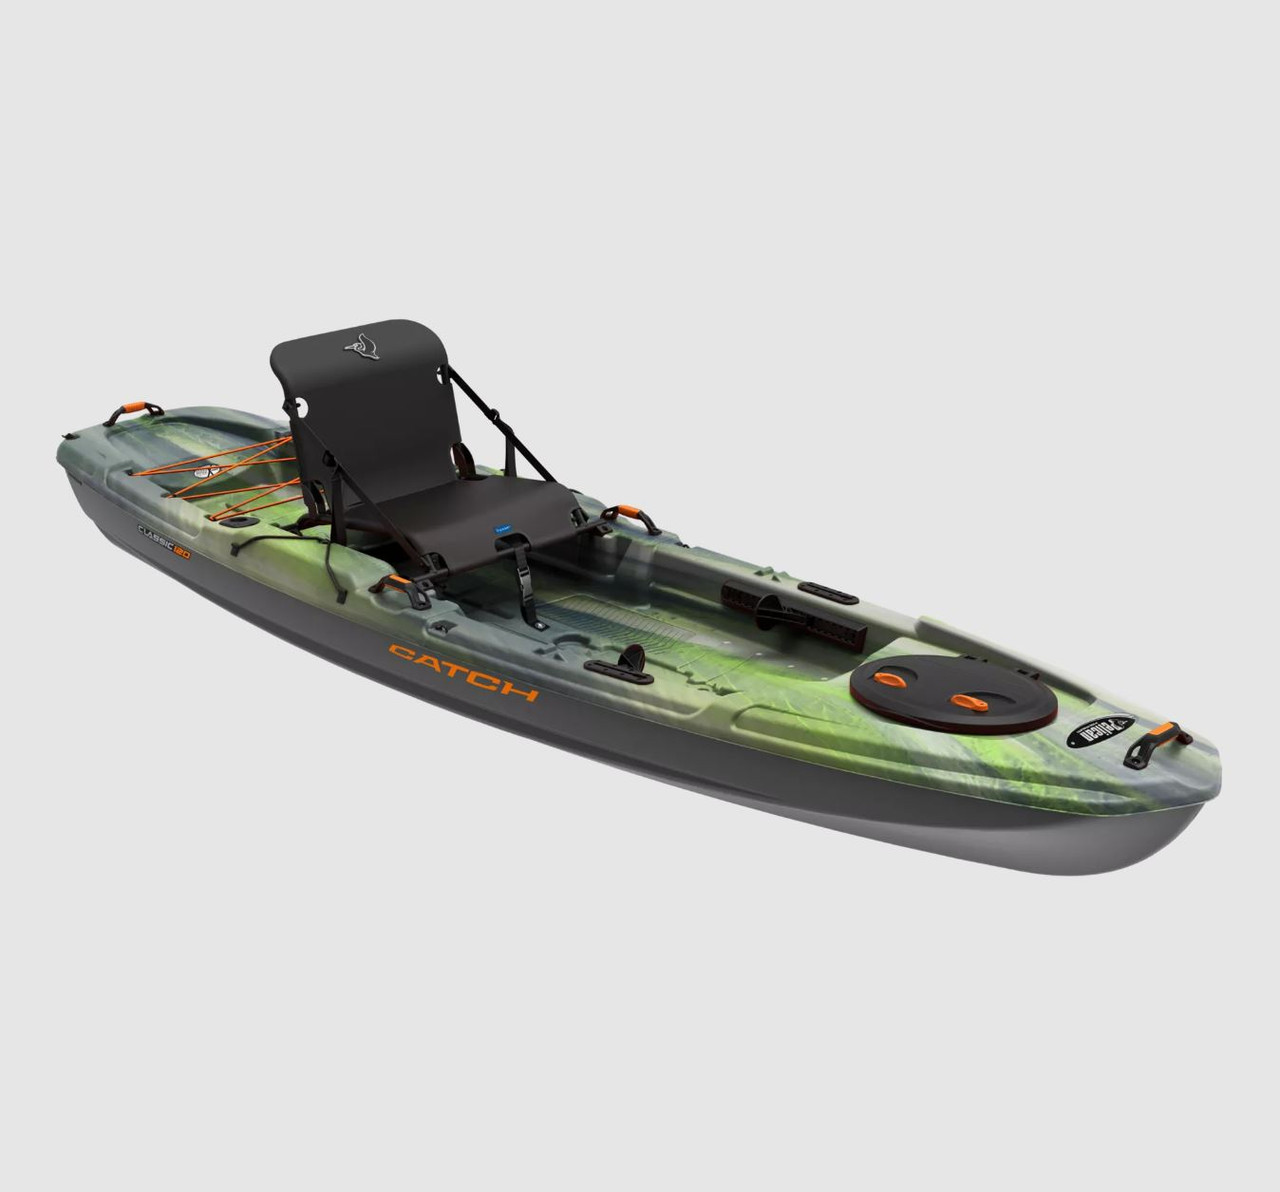 Sprint 120XR performance kayak